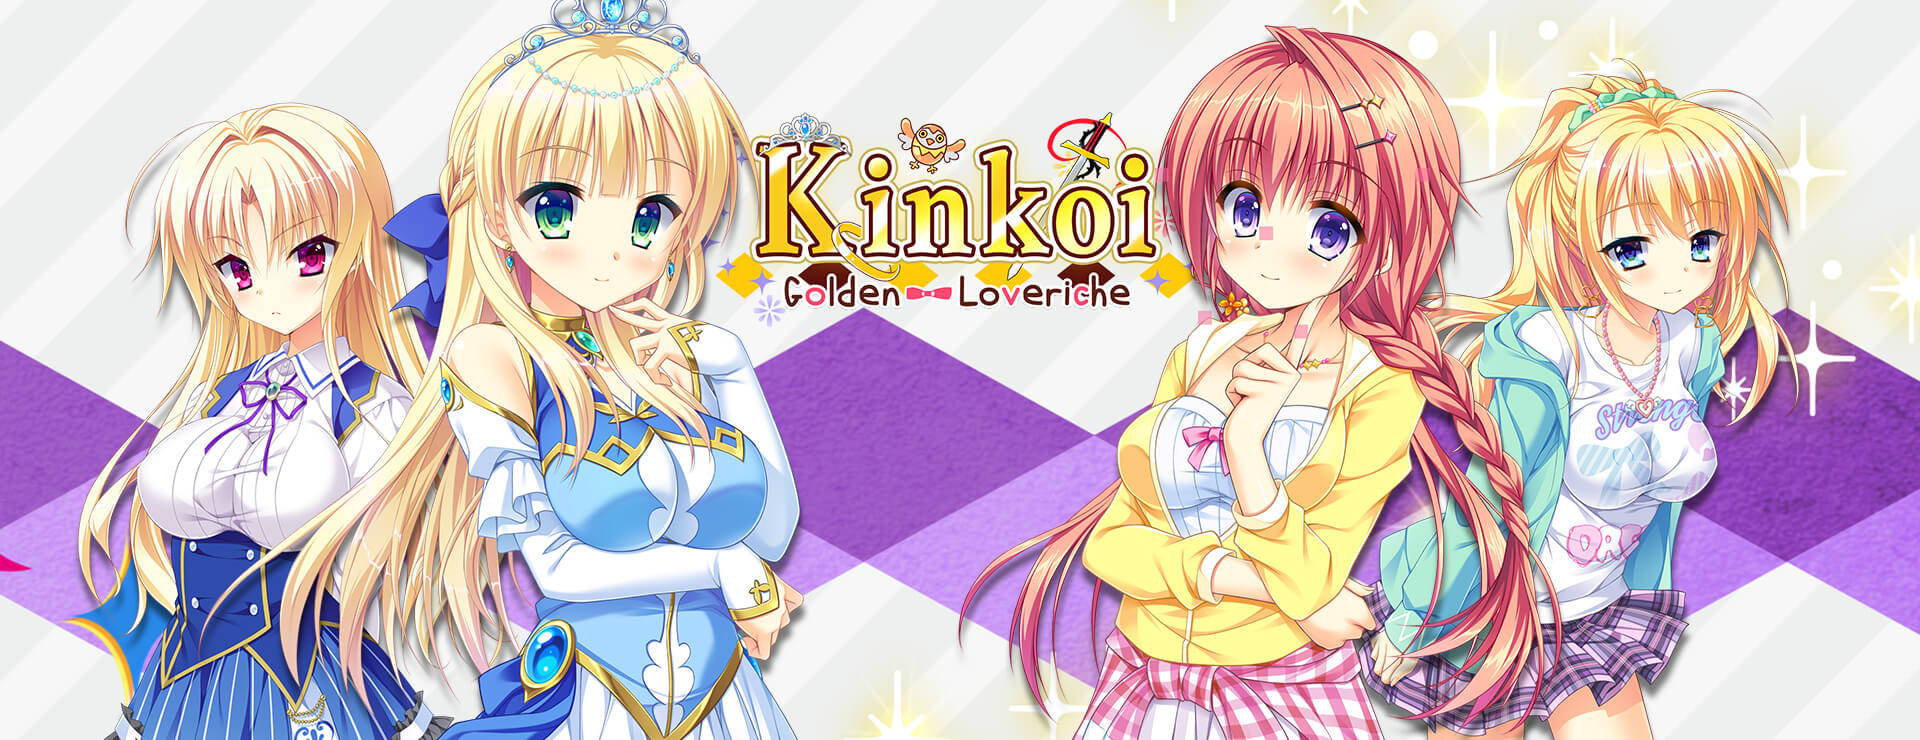 Kinkoi: Golden Loveriche - カジュアル ゲーム